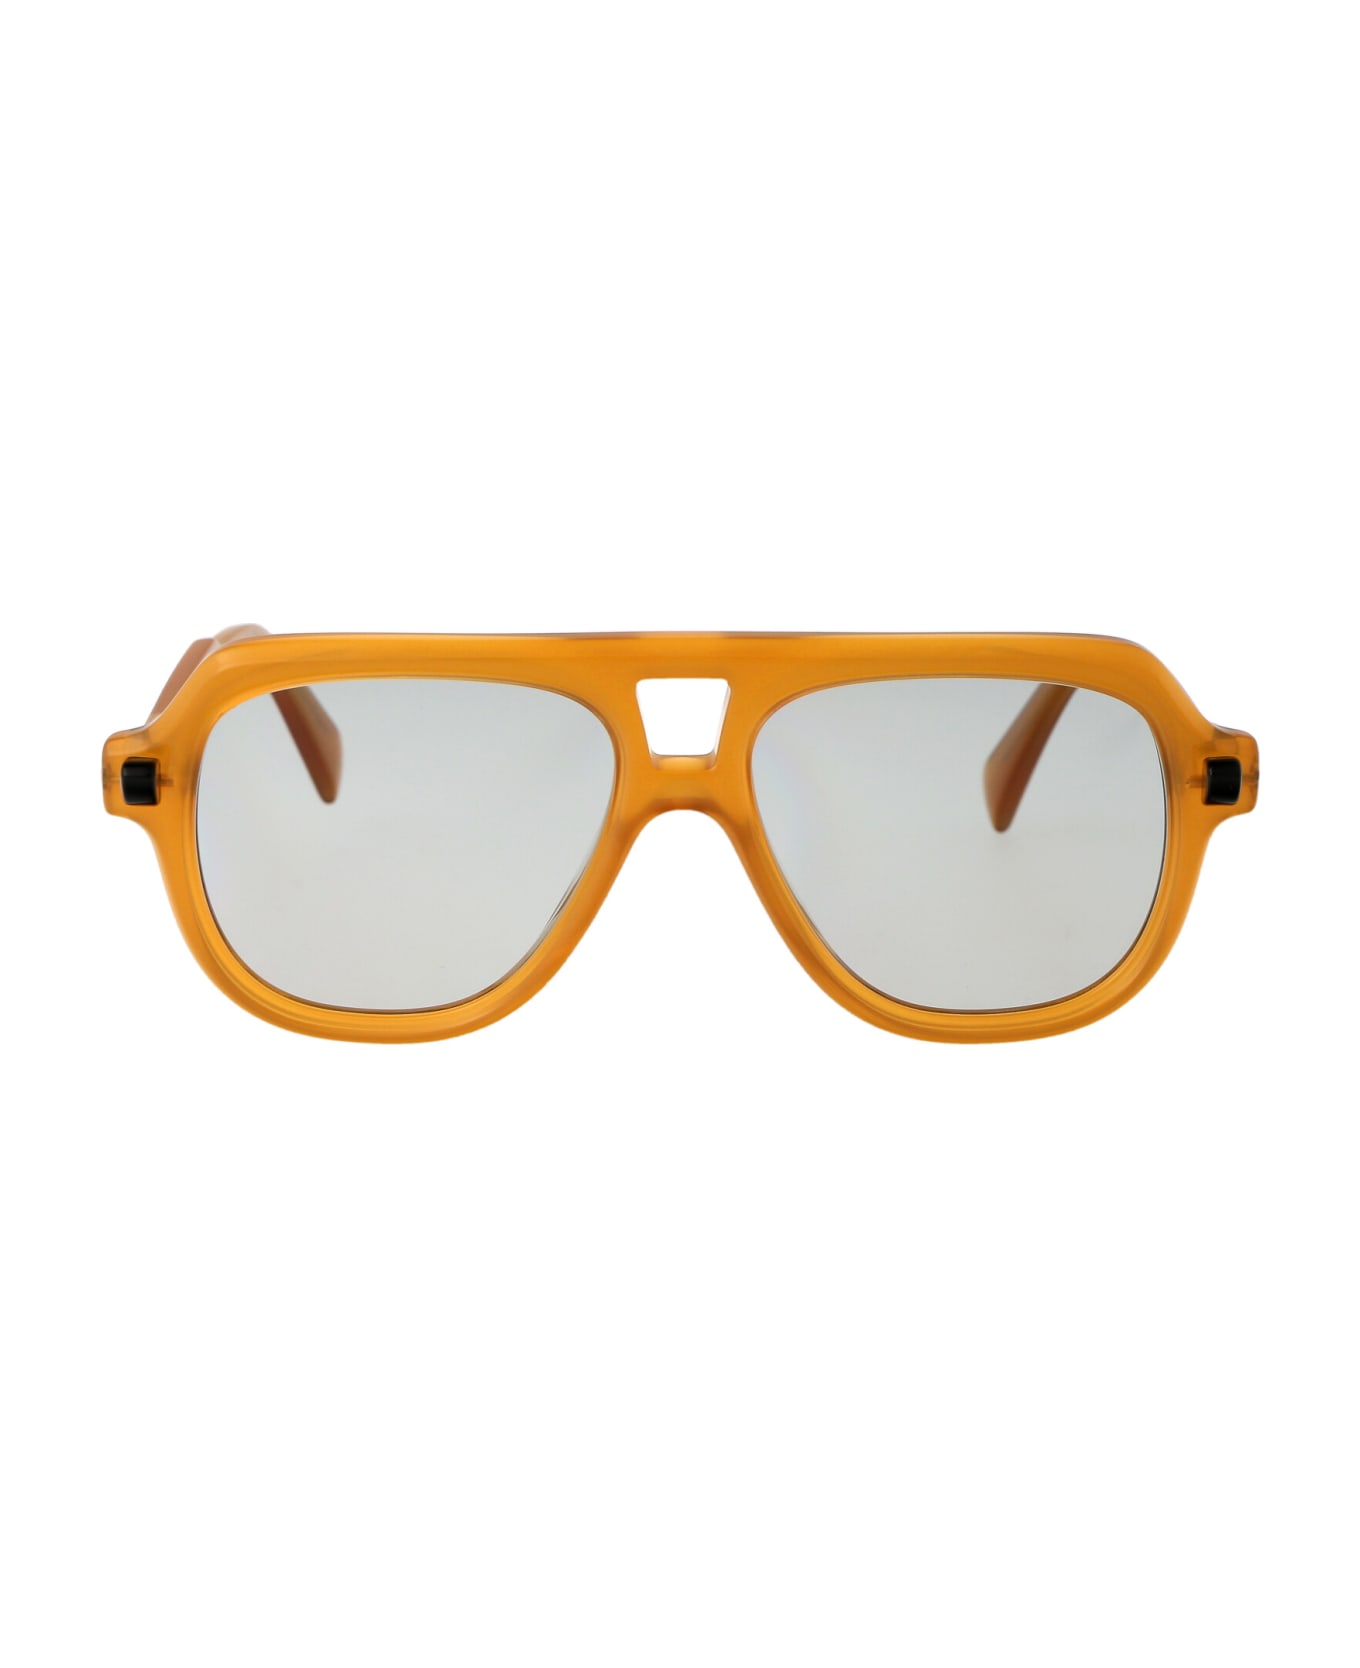 Kuboraum Maske Q4 Sunglasses - CA sand サングラス